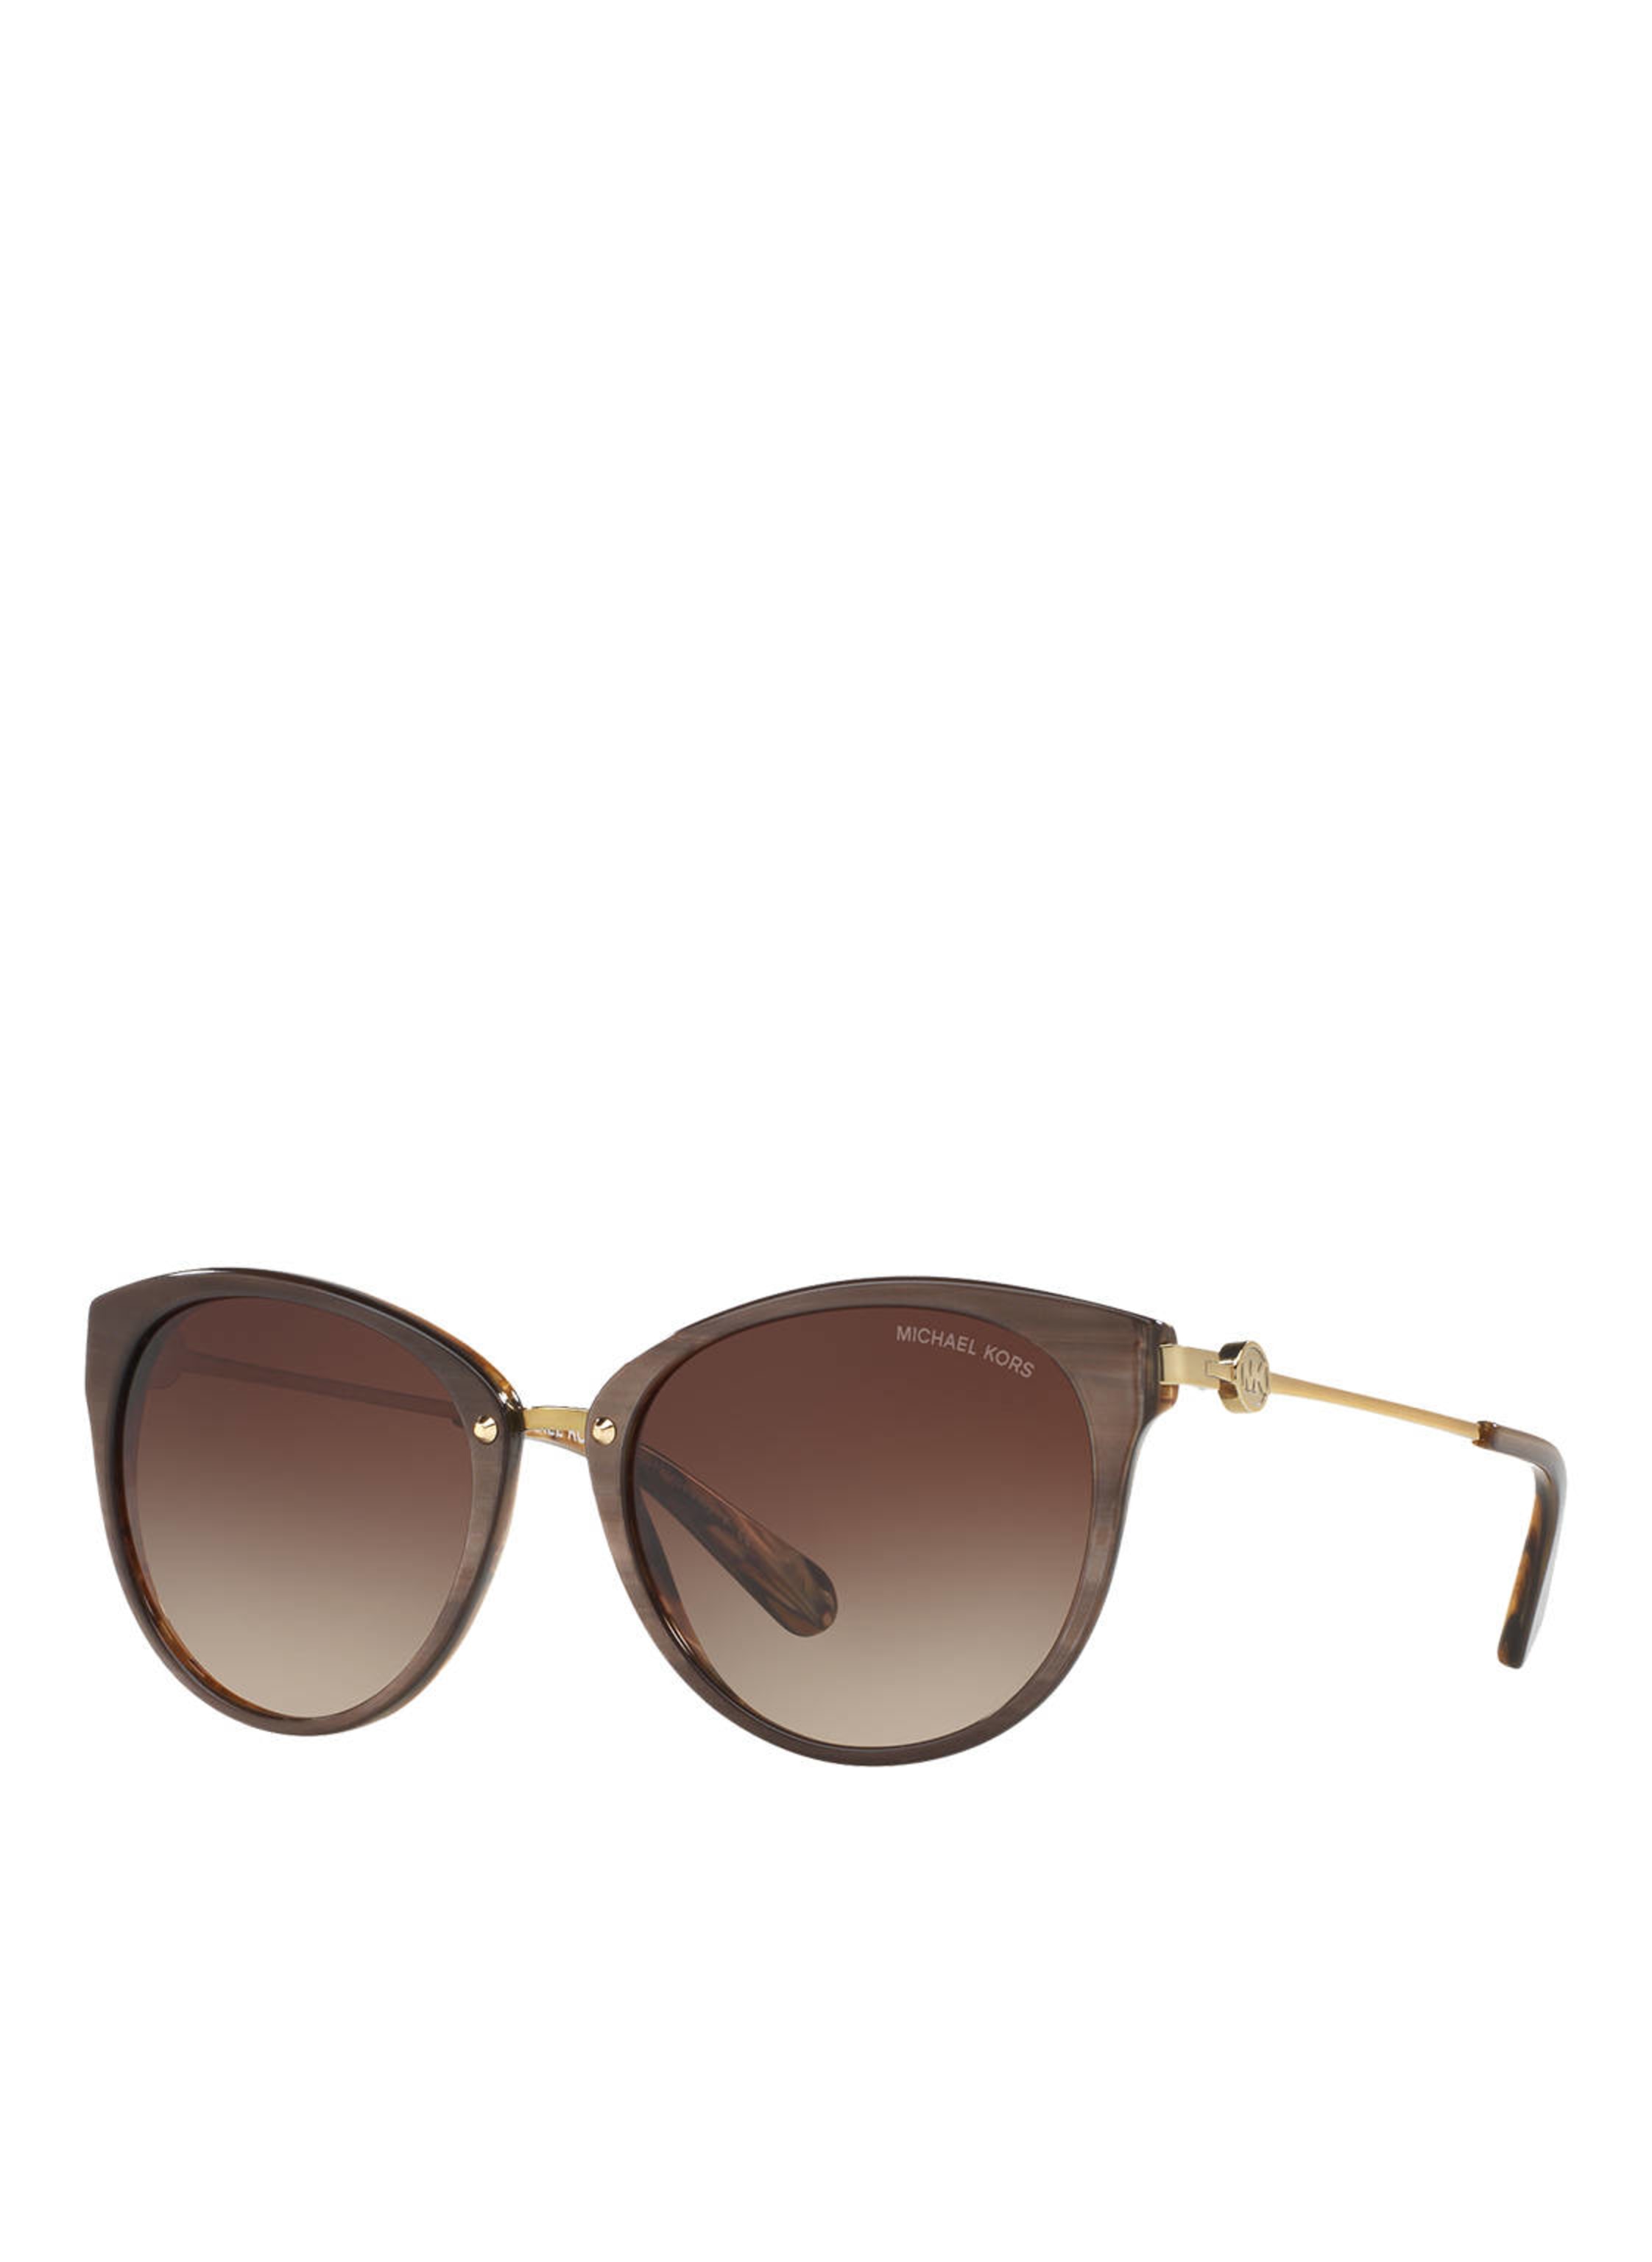 Michael Kors MK6039 ABELA II 314813 Sunglasses Pink  SmartBuyGlasses Canada